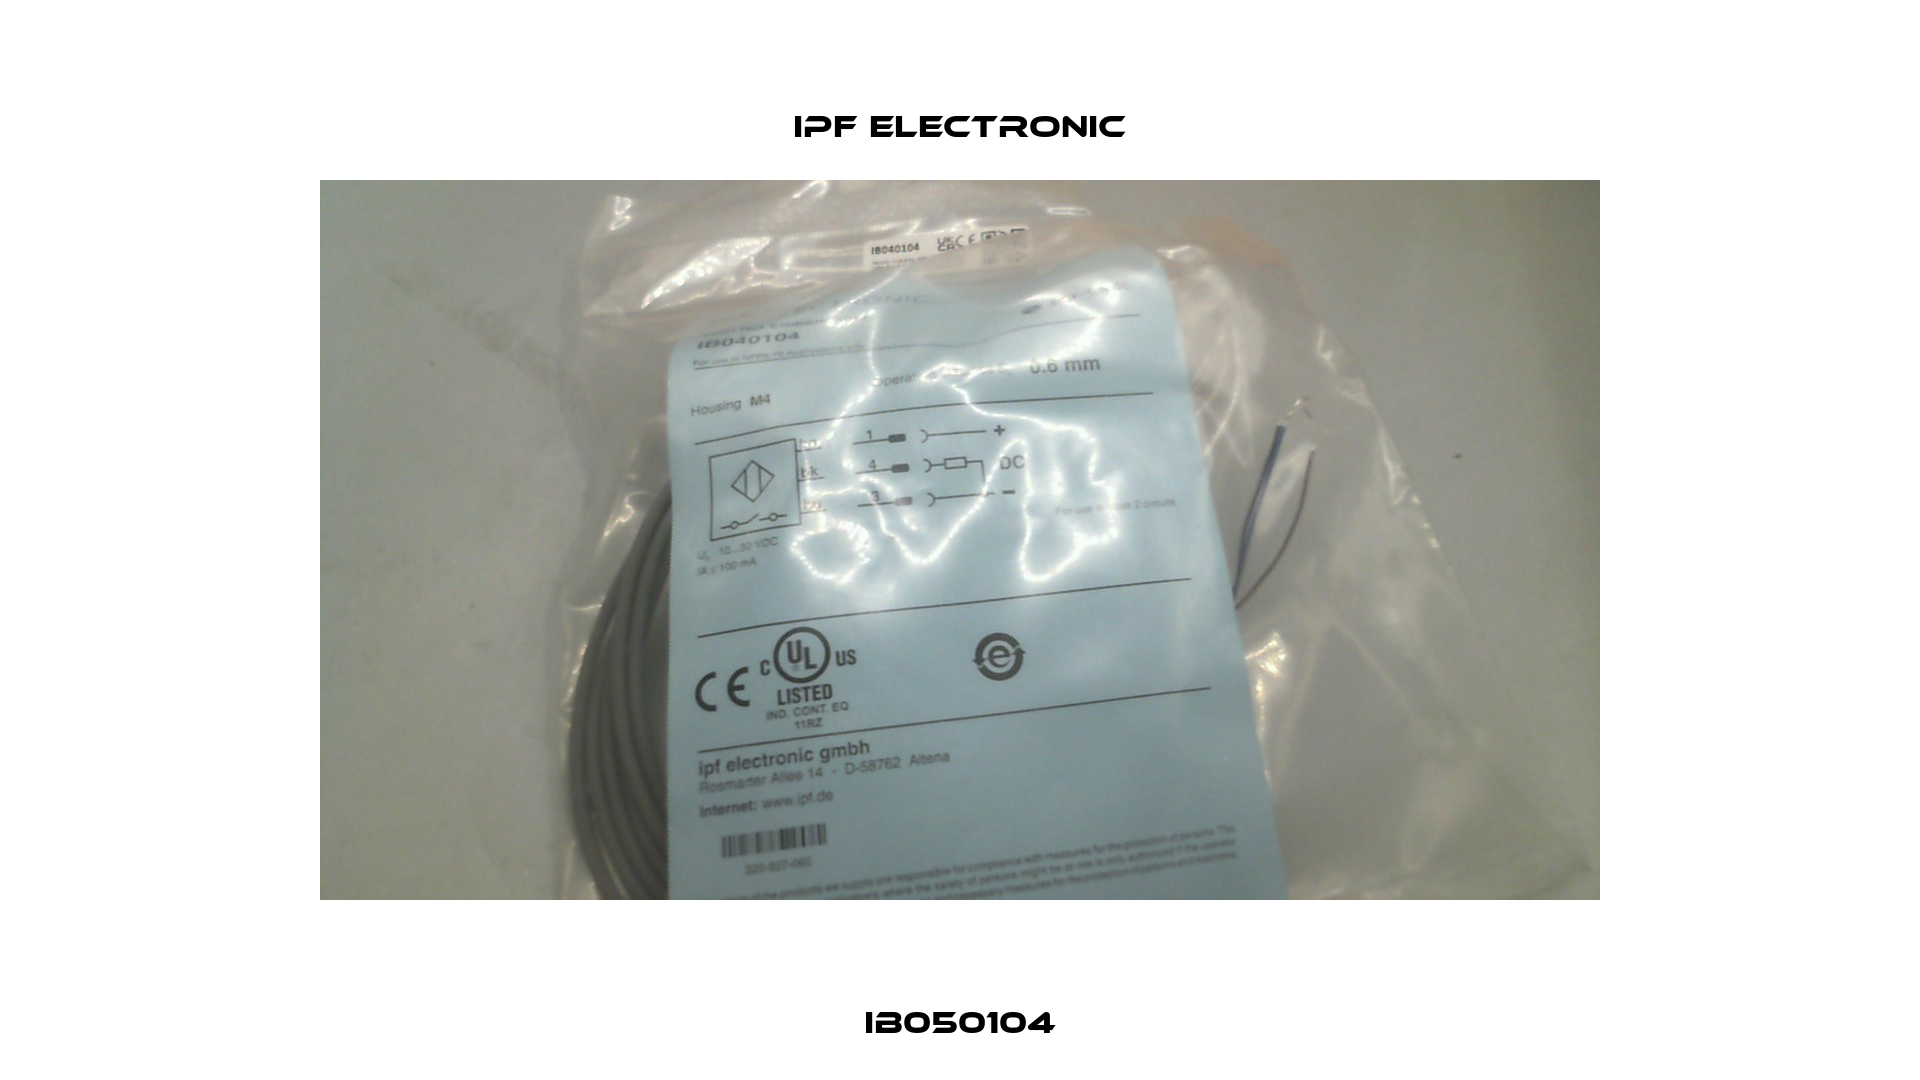 IB050104 IPF Electronic